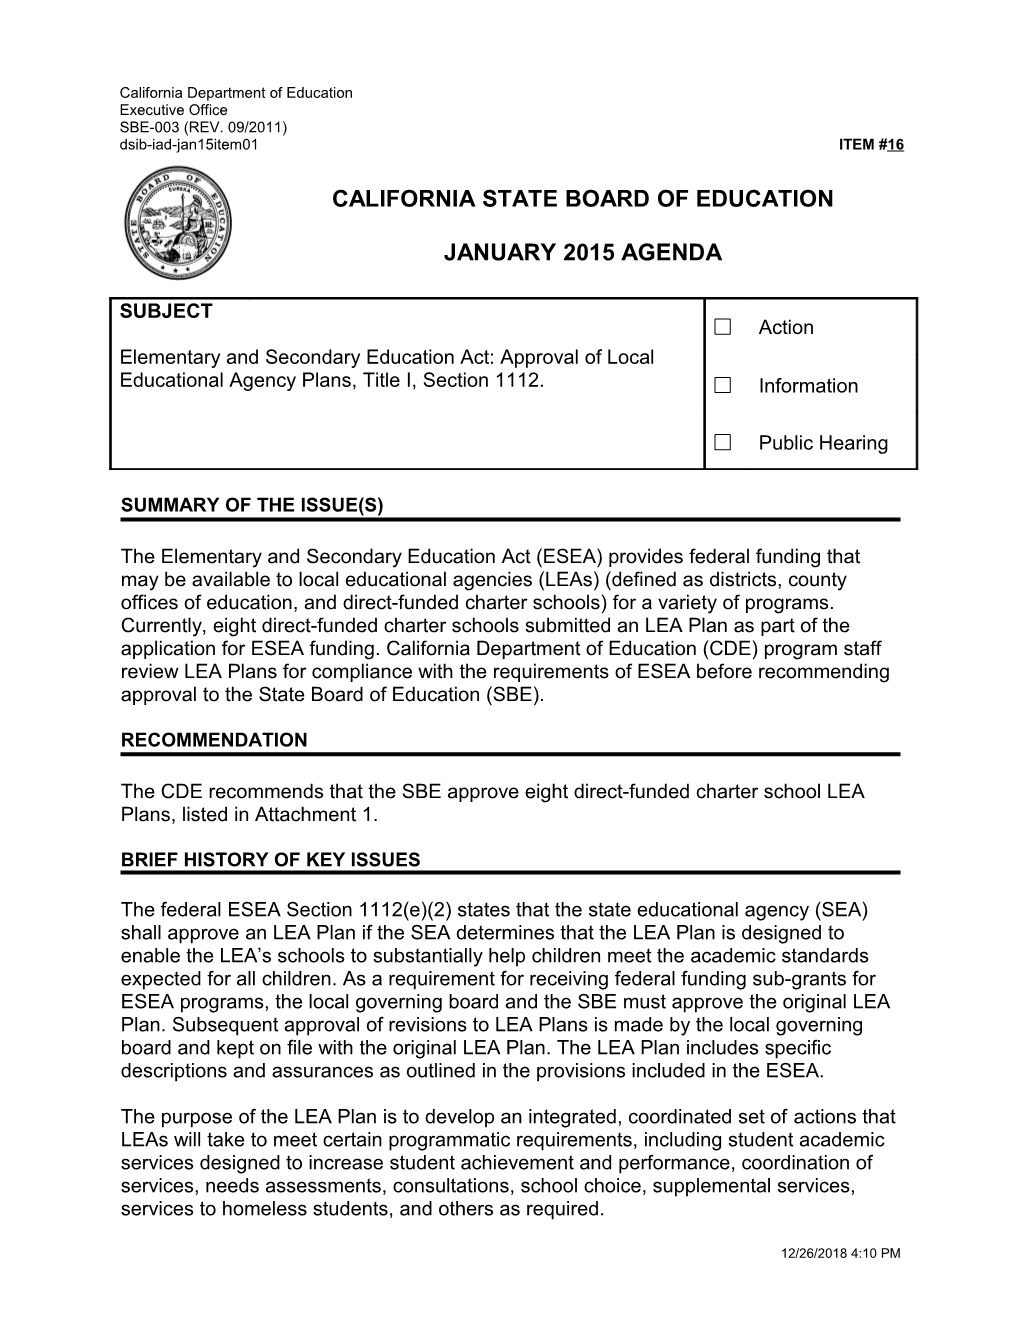 January 2015 Agenda Item 16 - Meeting Agendas (CA State Board of Education)